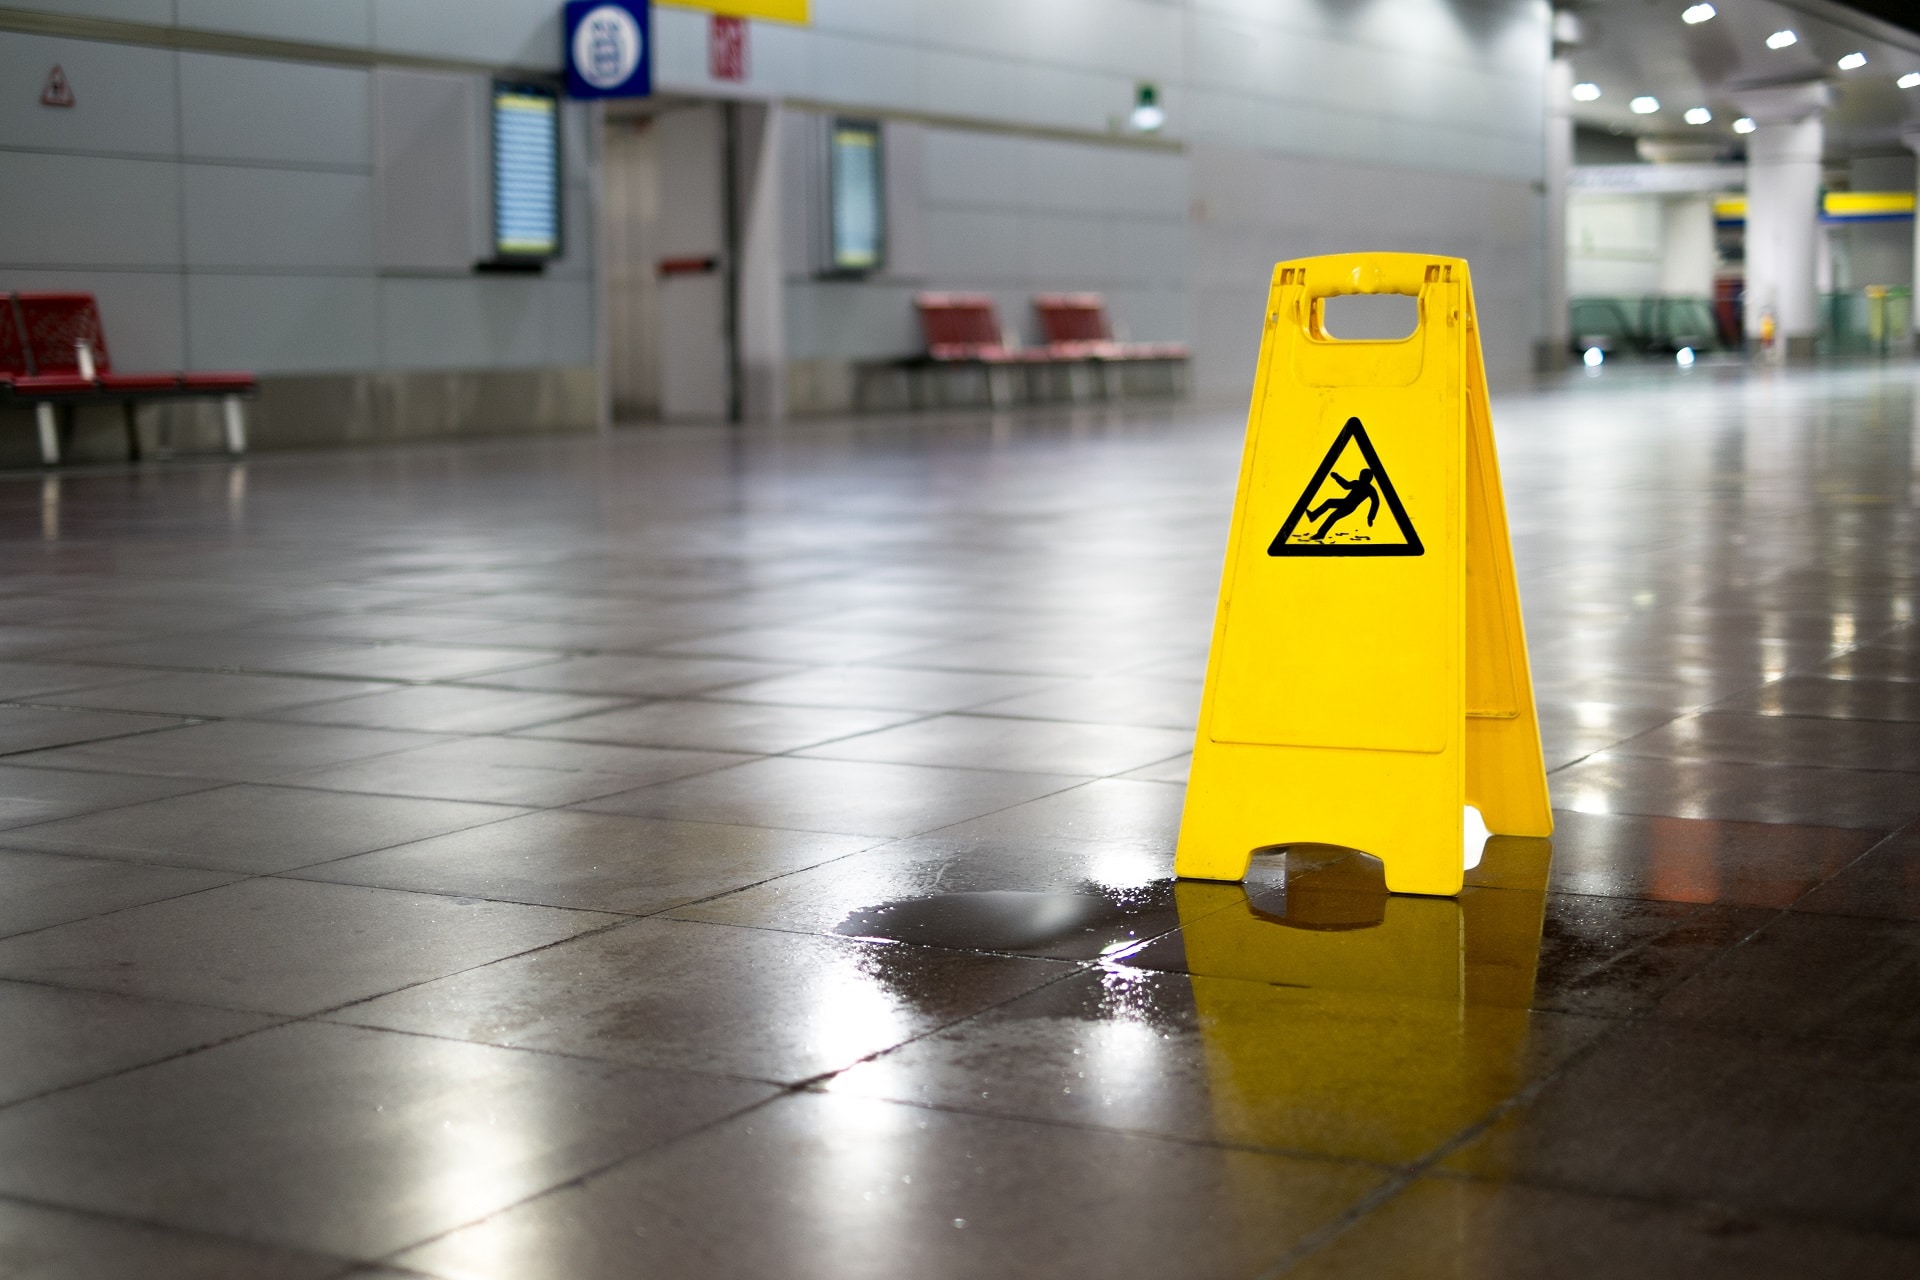 Warning of a wet floor hazard on property | premises liability lawyer nyc | Gash & Associates, P.C.